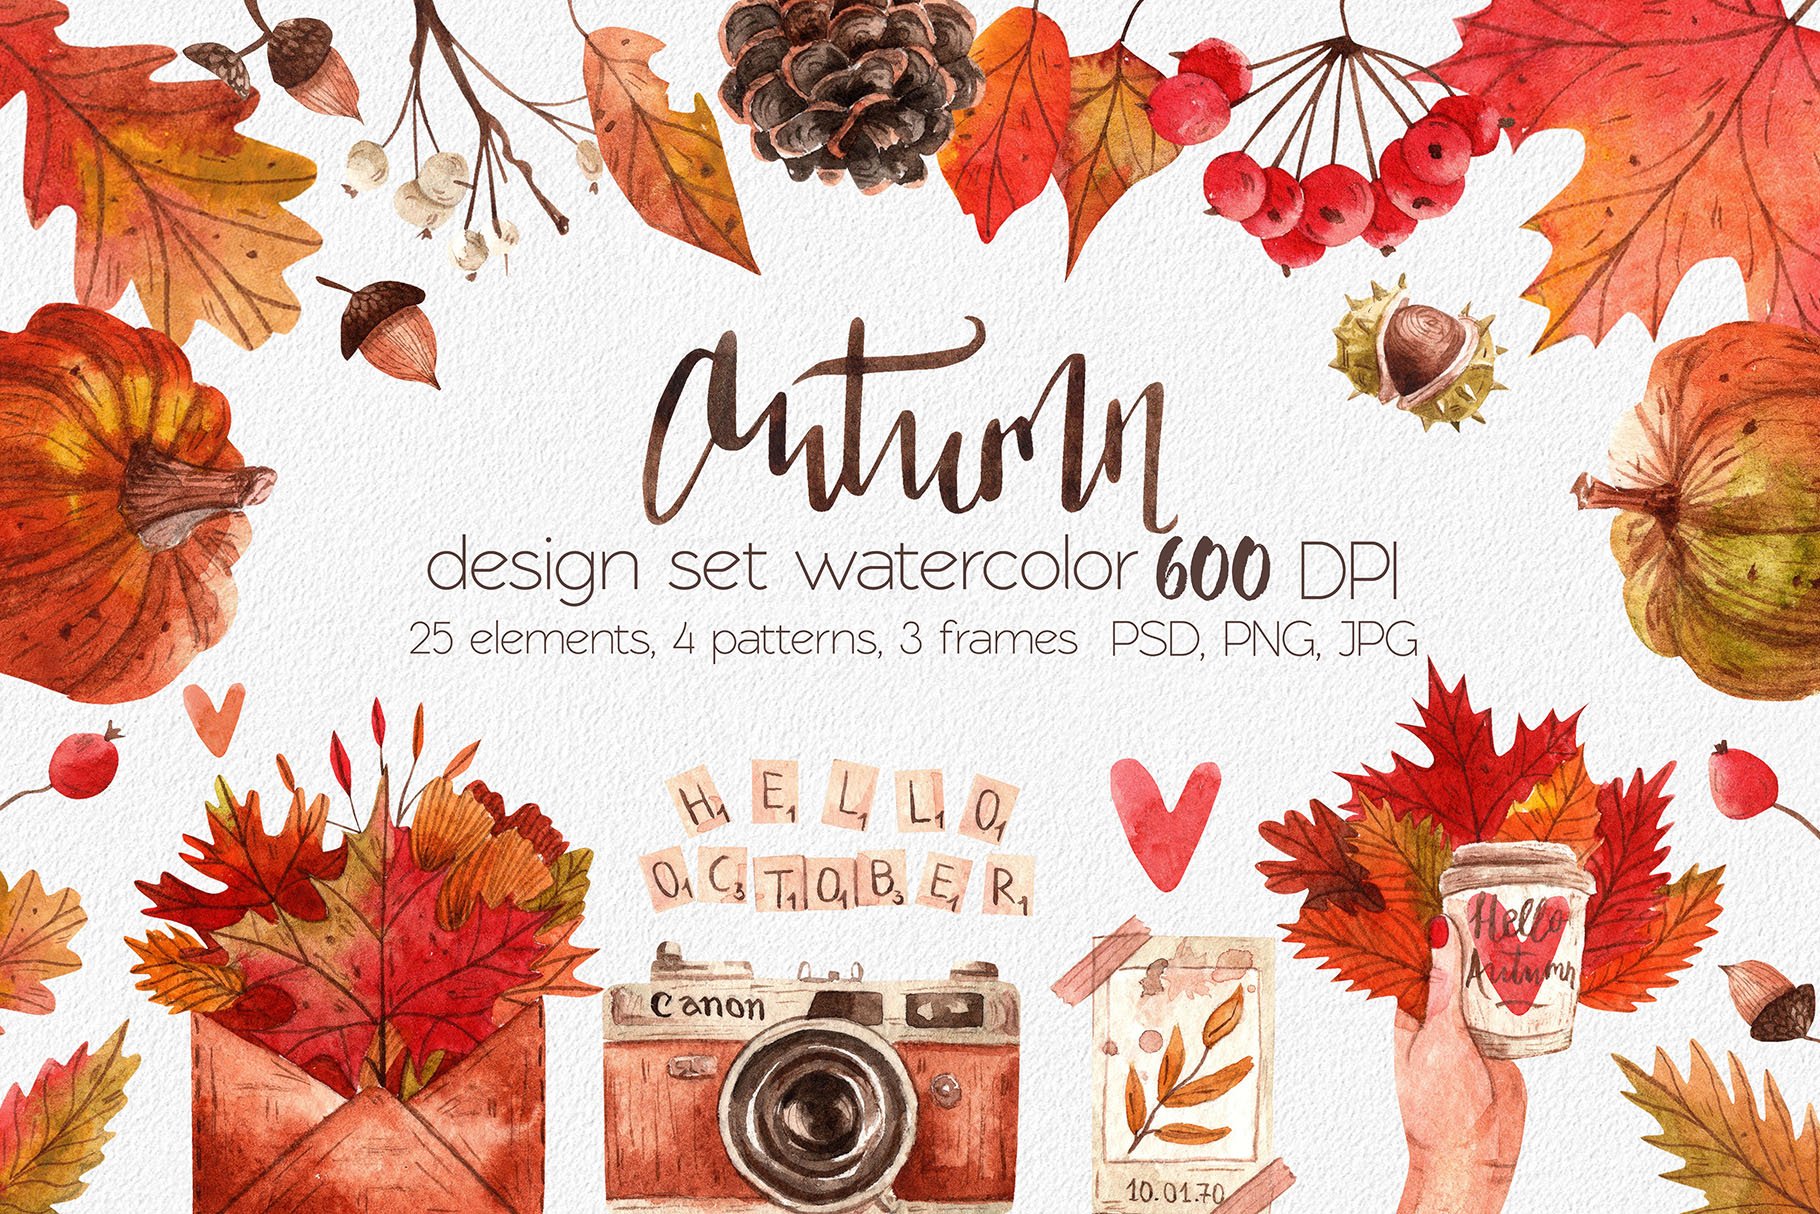 Autumn watercolor set cover image.